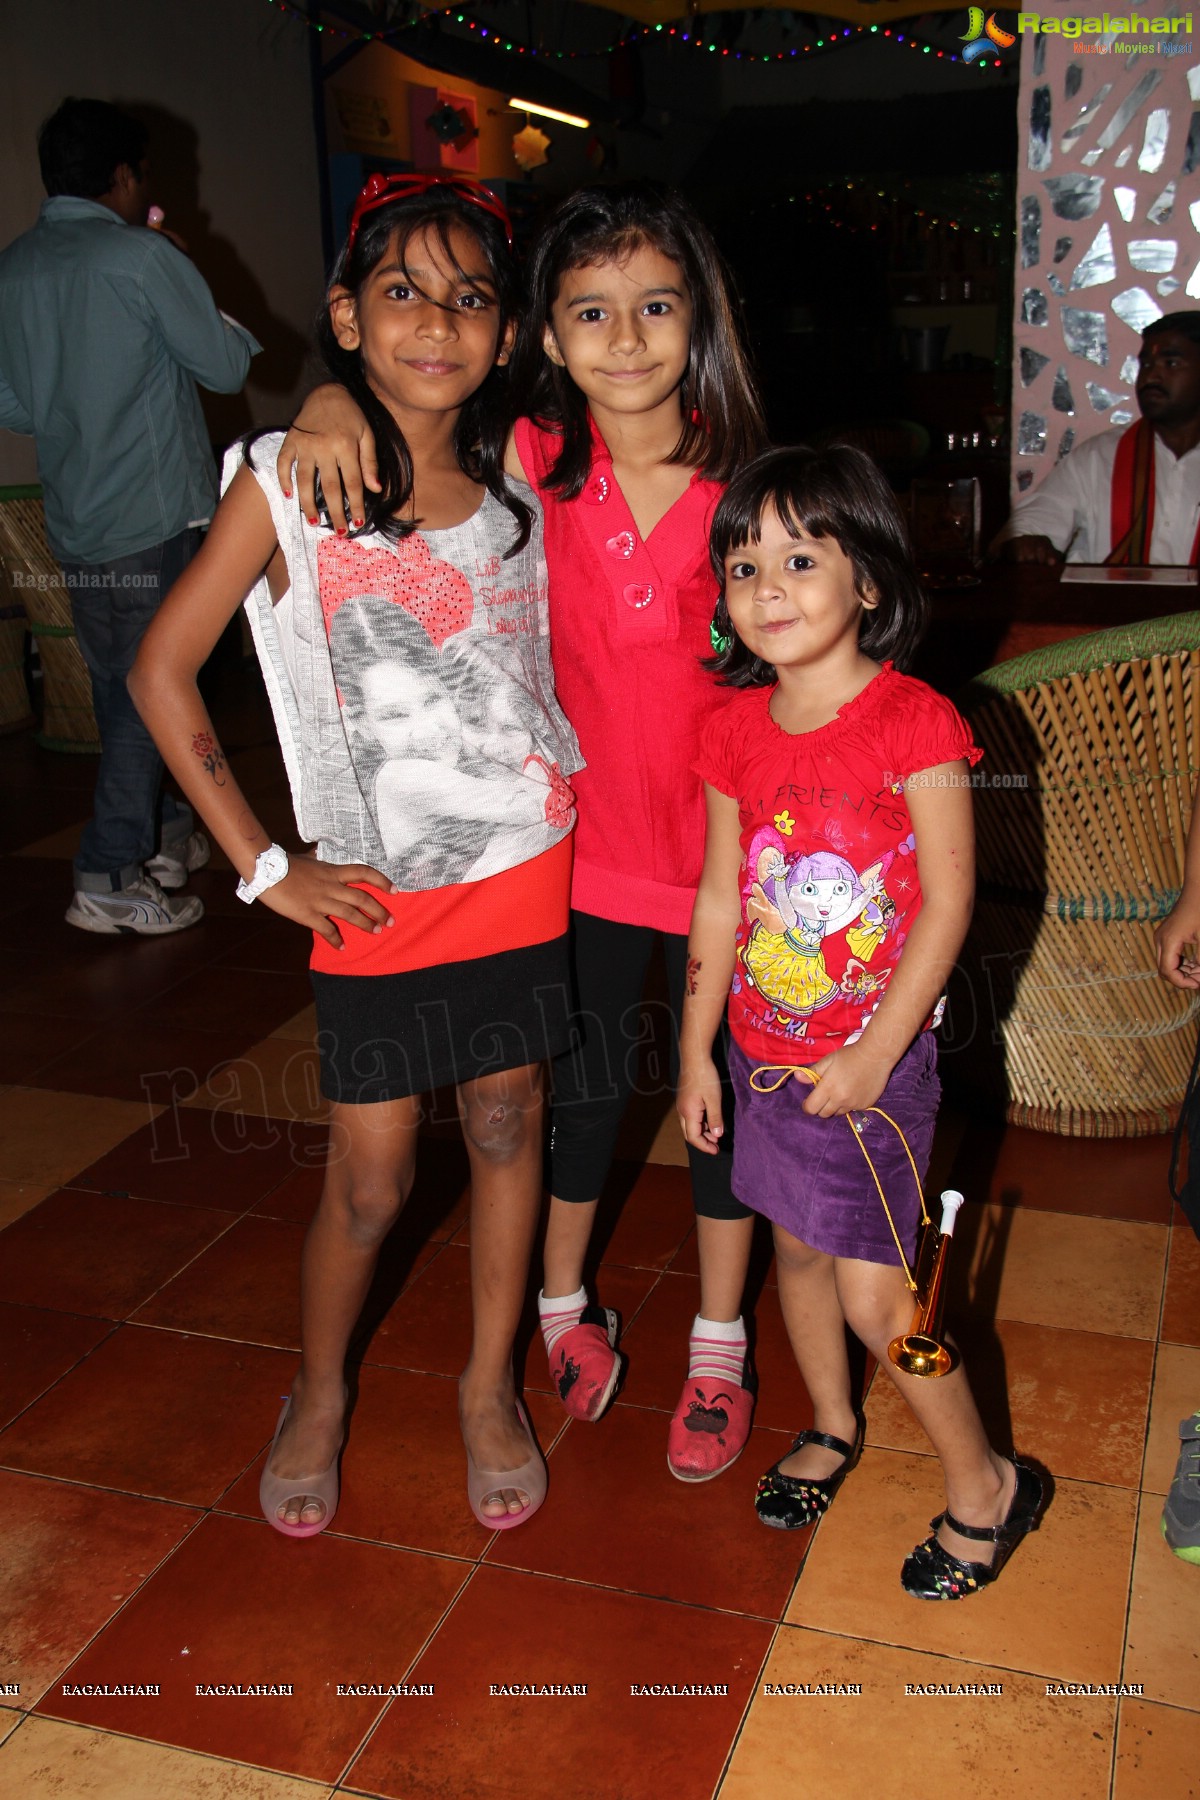 Mom Kiddos Club Treasure Hunt at Village, Hyderabad